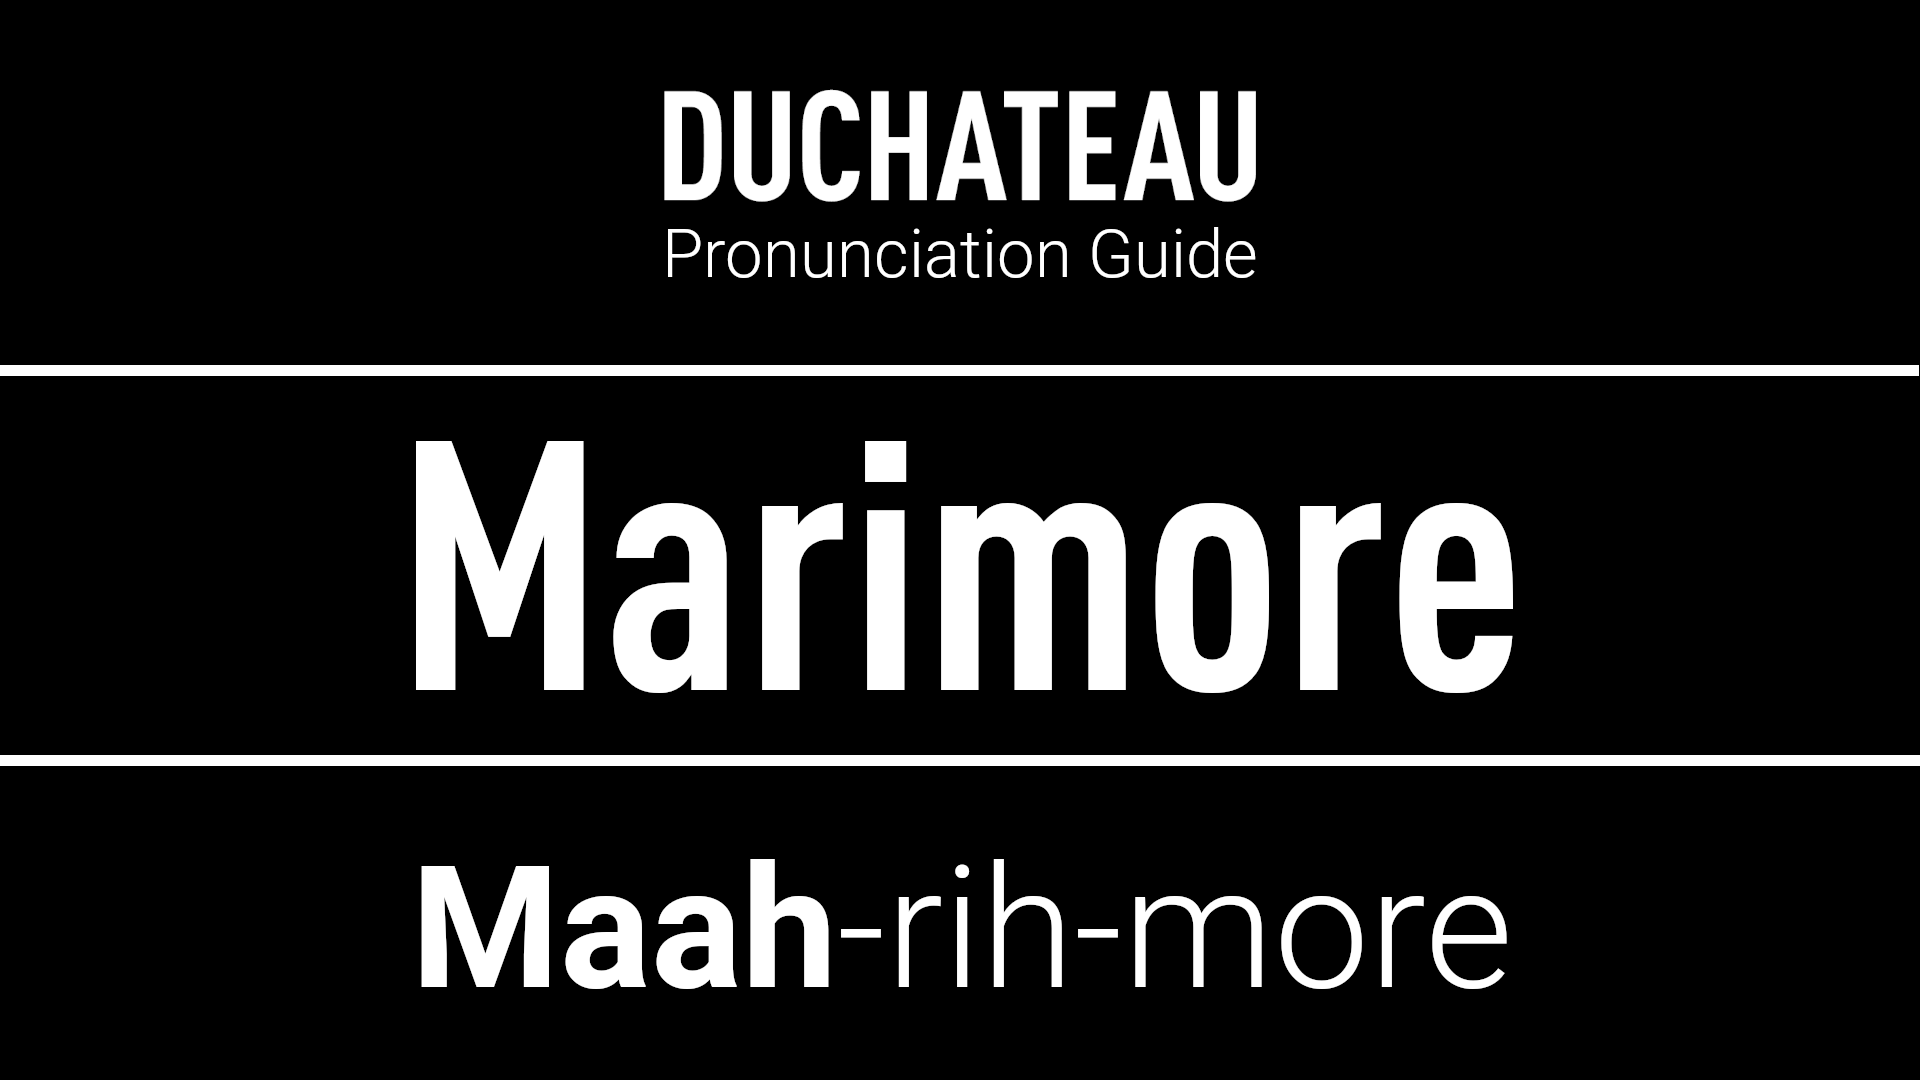 Marimore Pronunciation